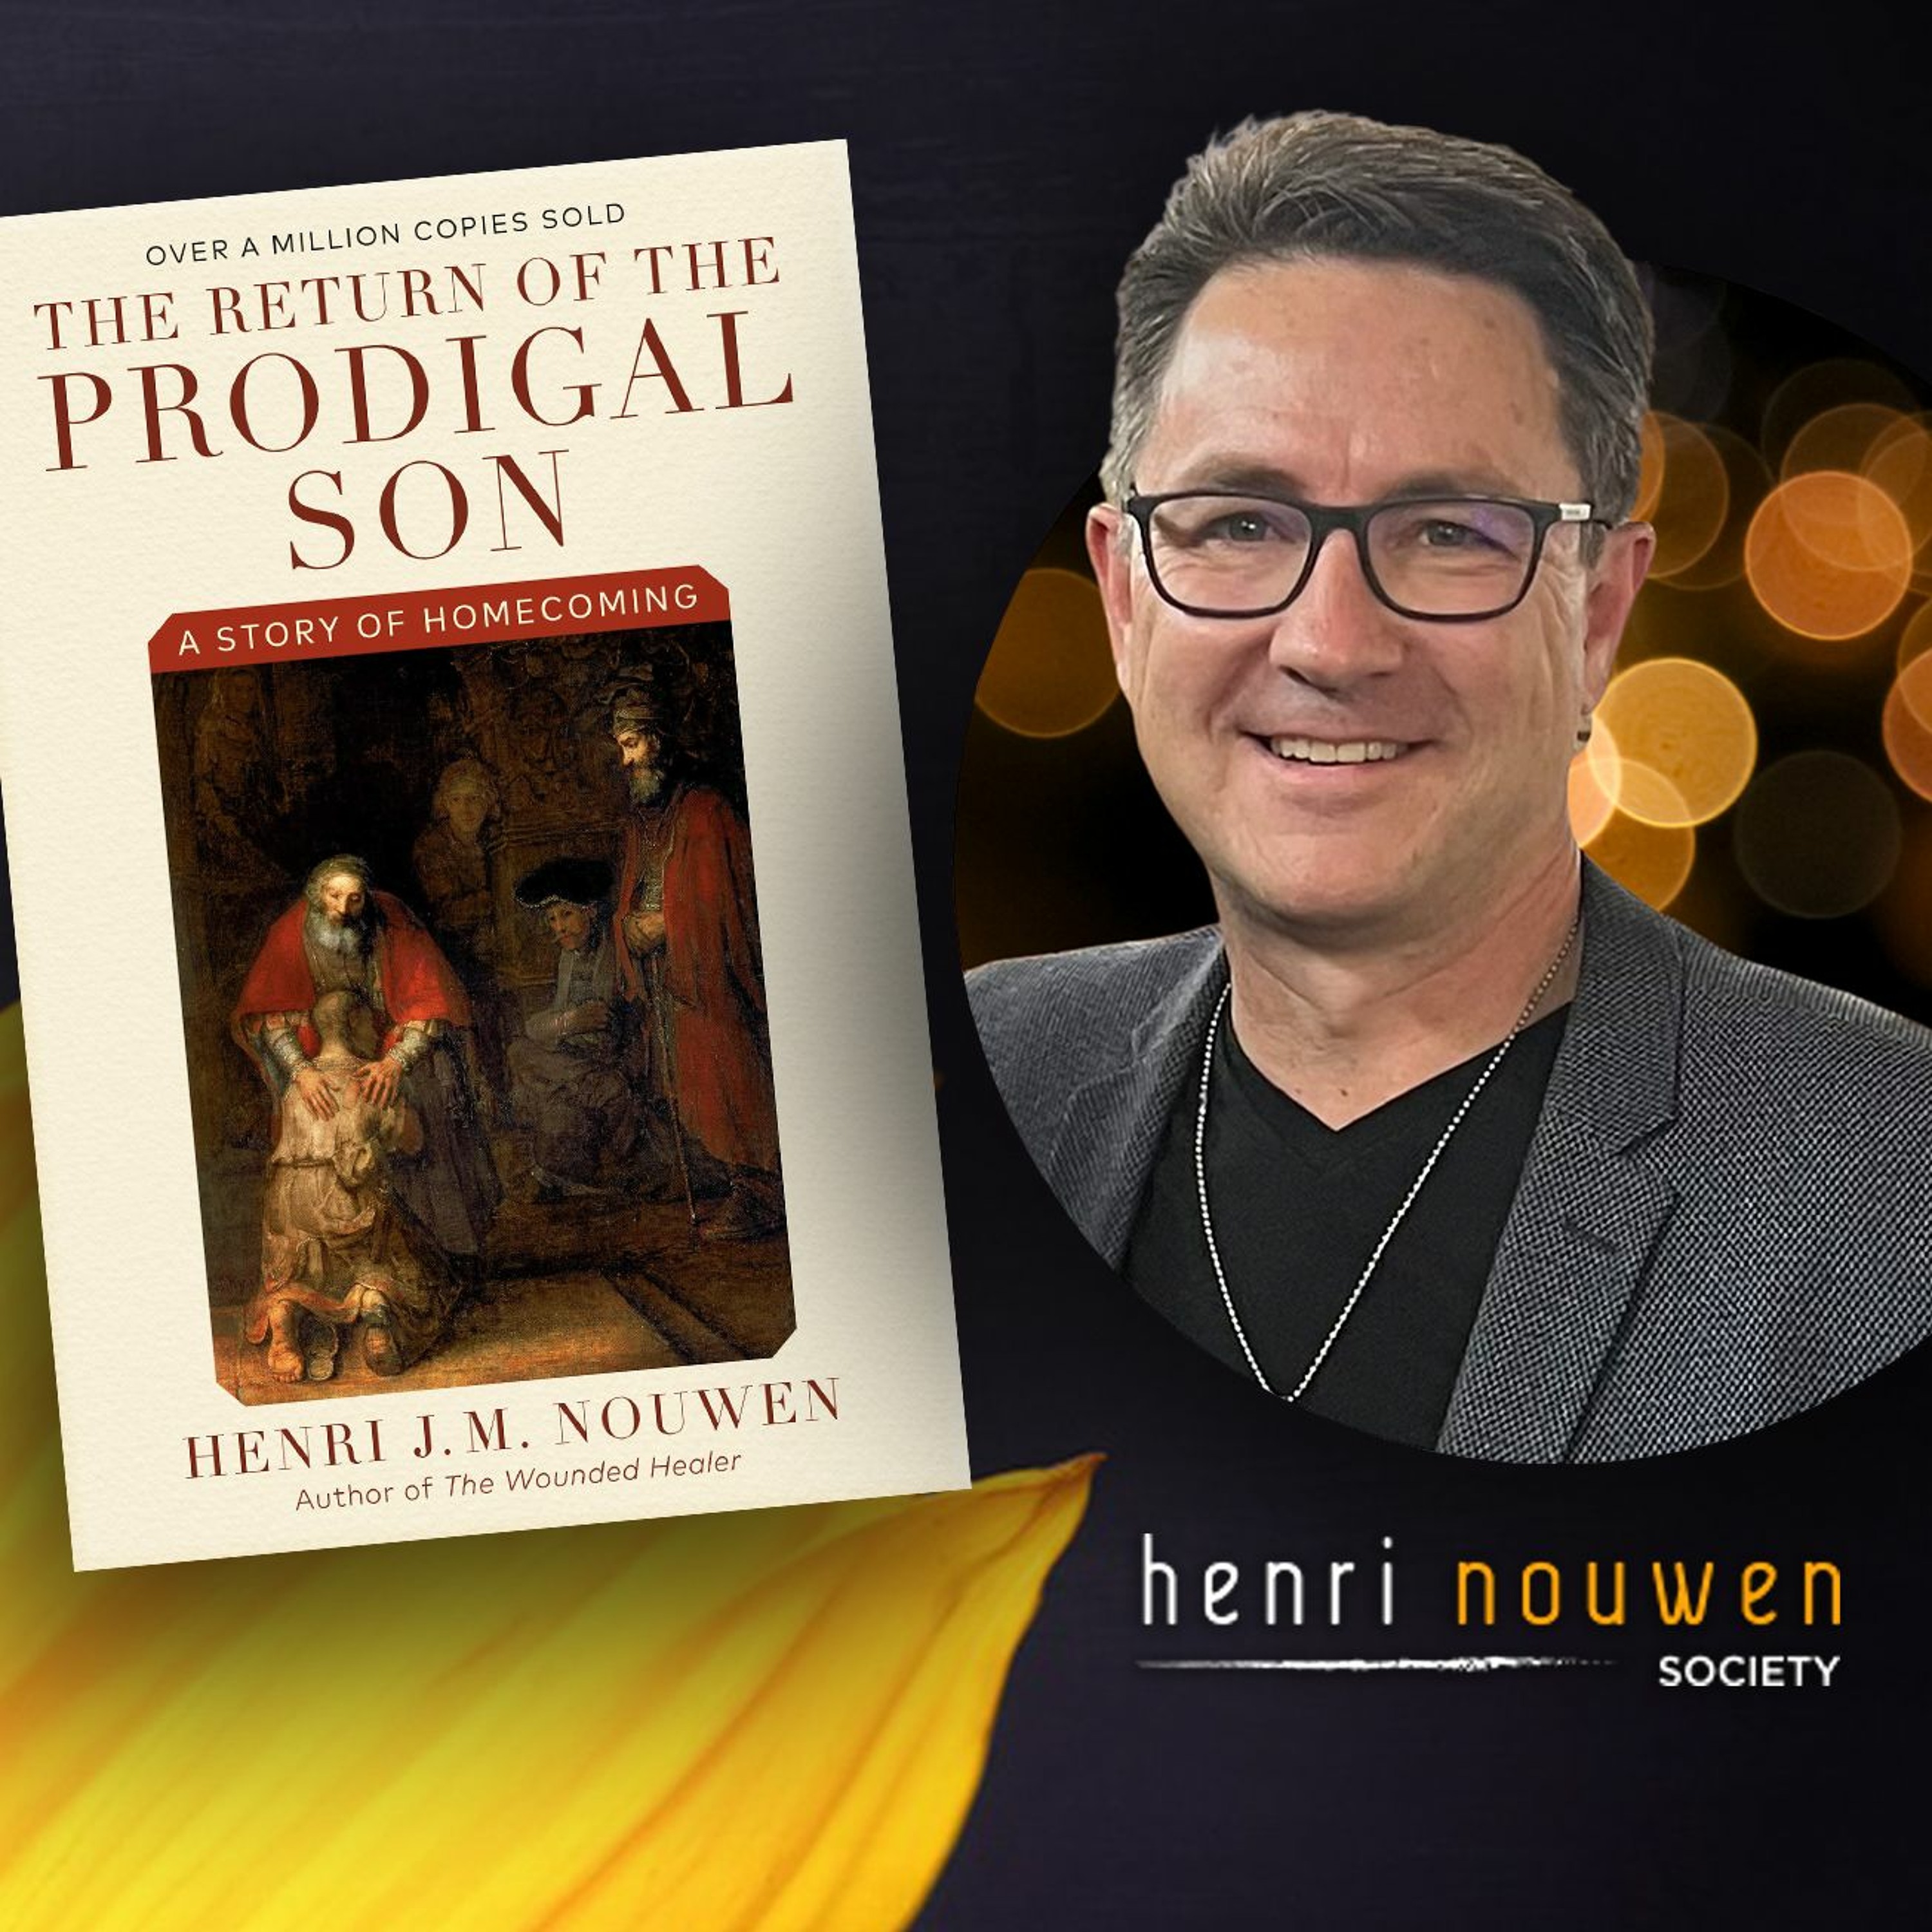 Henri Nouwen, Now & Then Podcast | Denis Jacobs "Prison Ministry & The Prodigal Son"